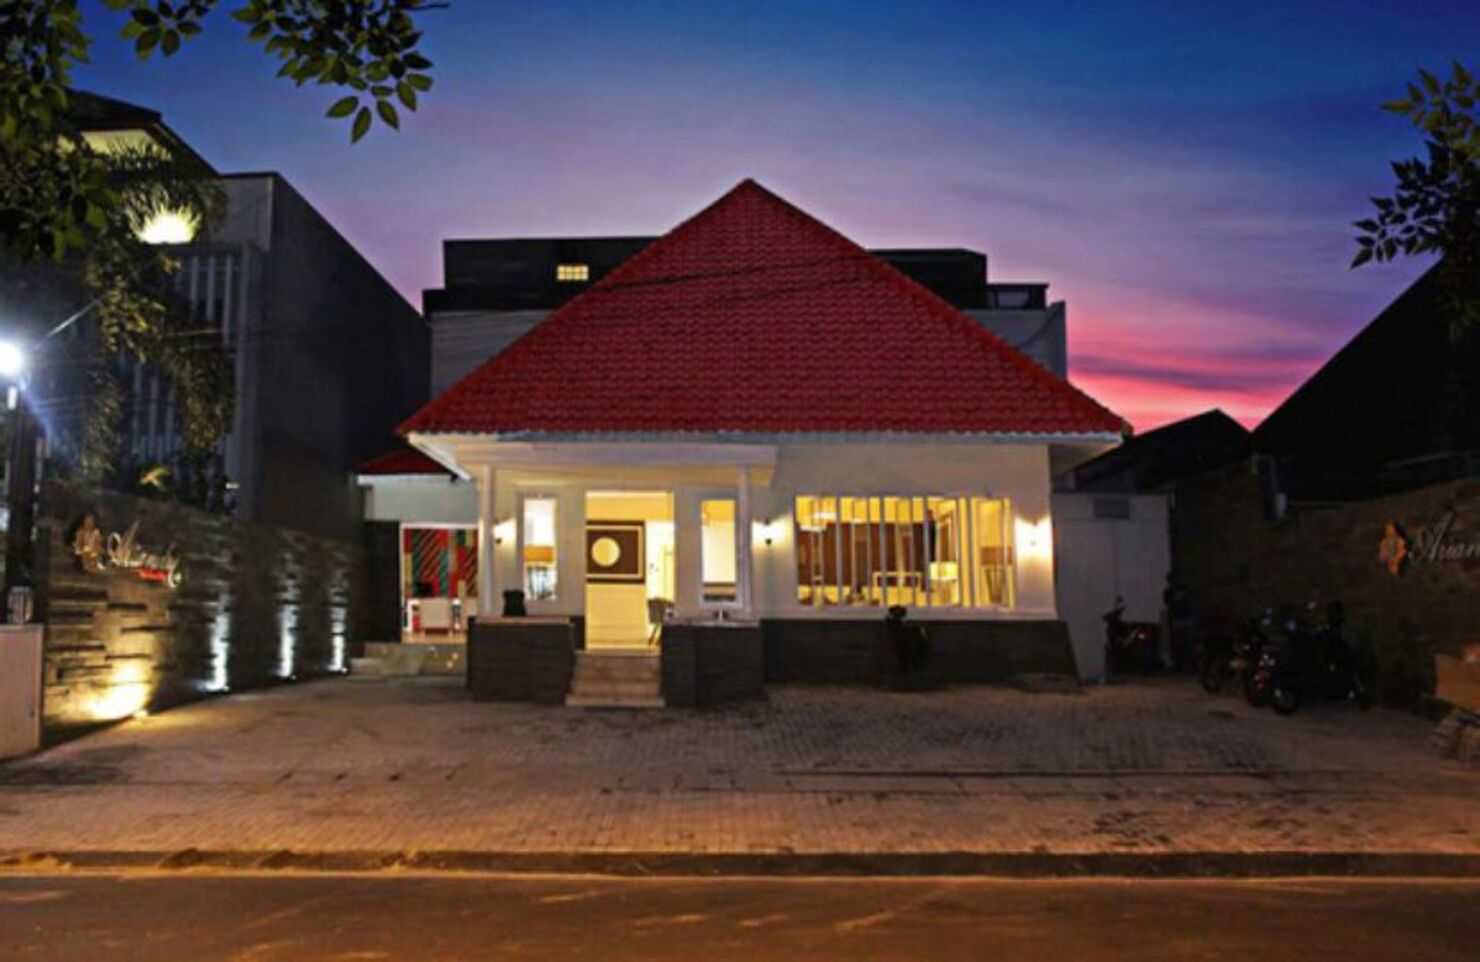 Meliala Residence Cilaki, Bandung